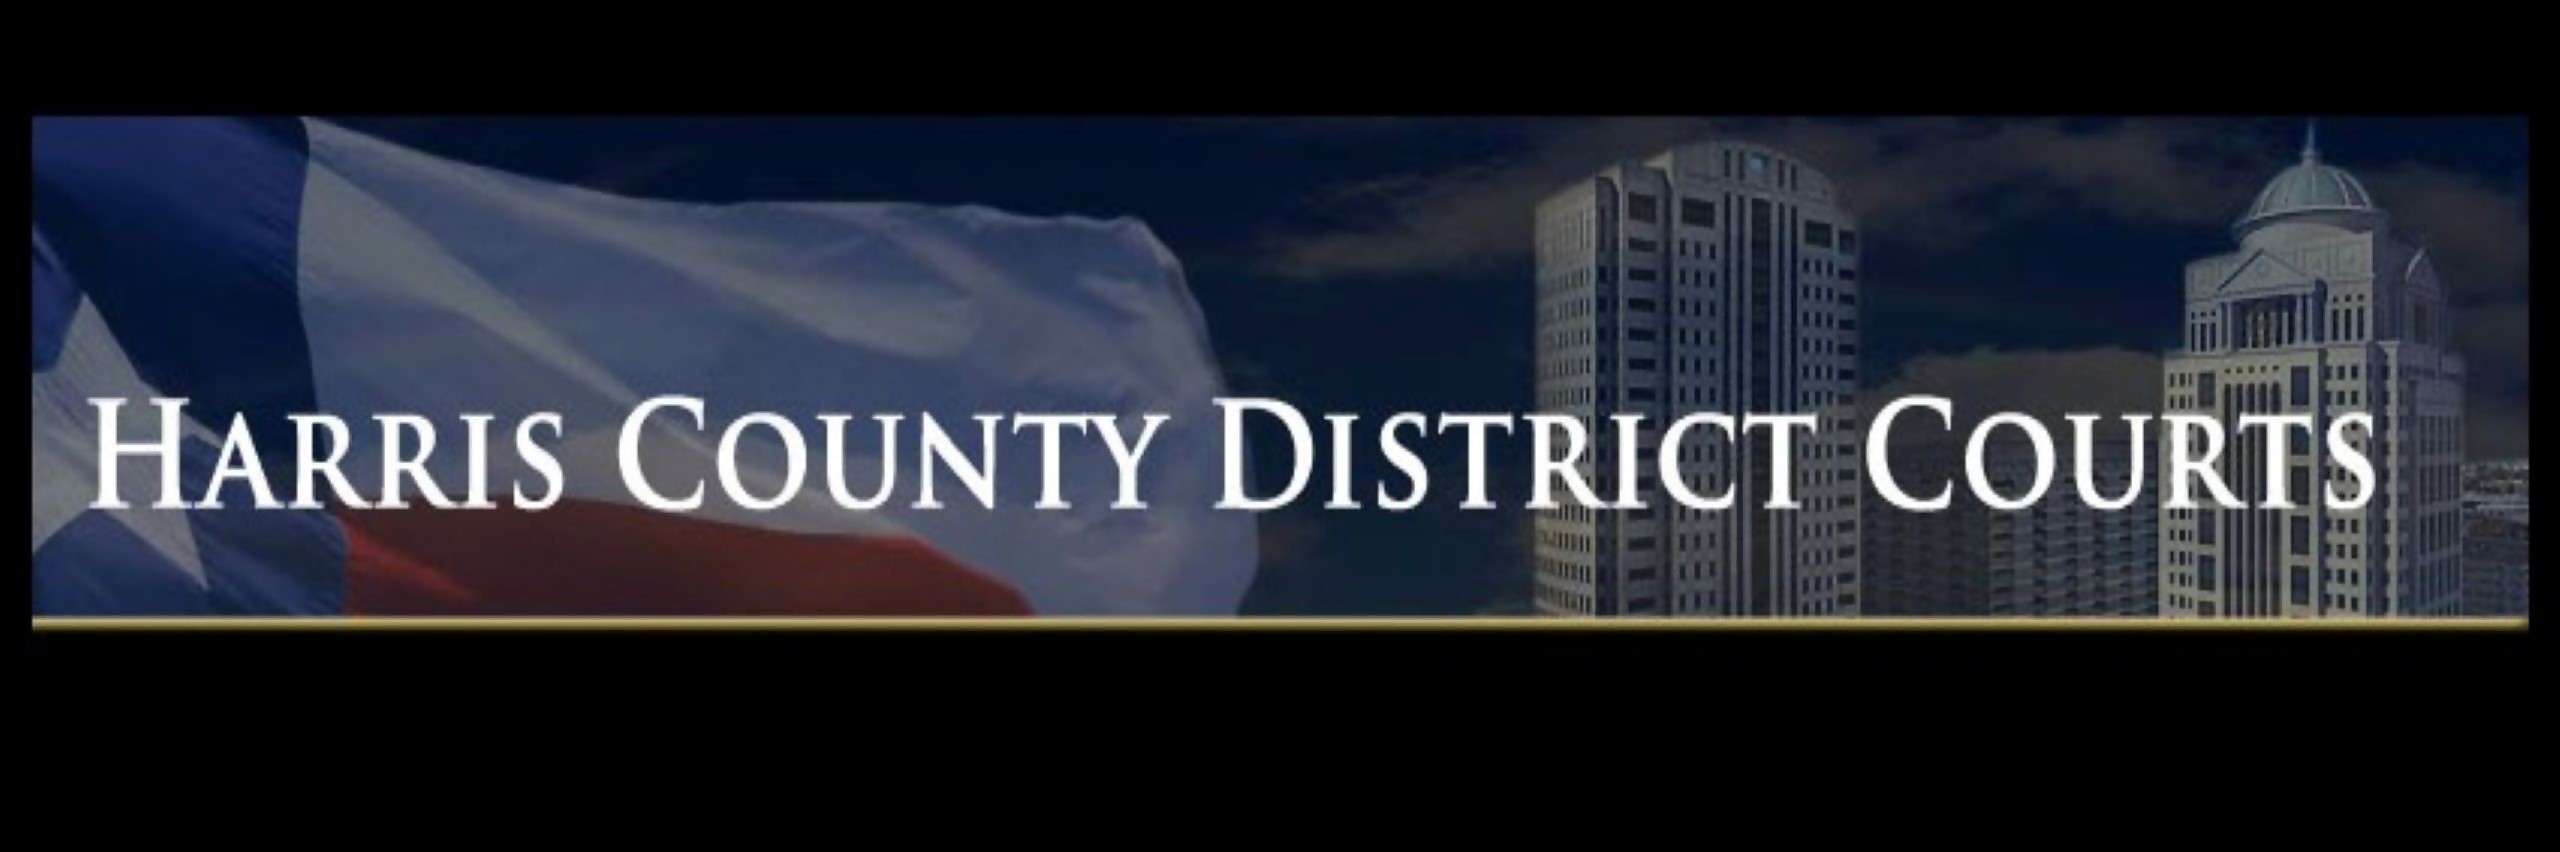 337th District Court Live Stream